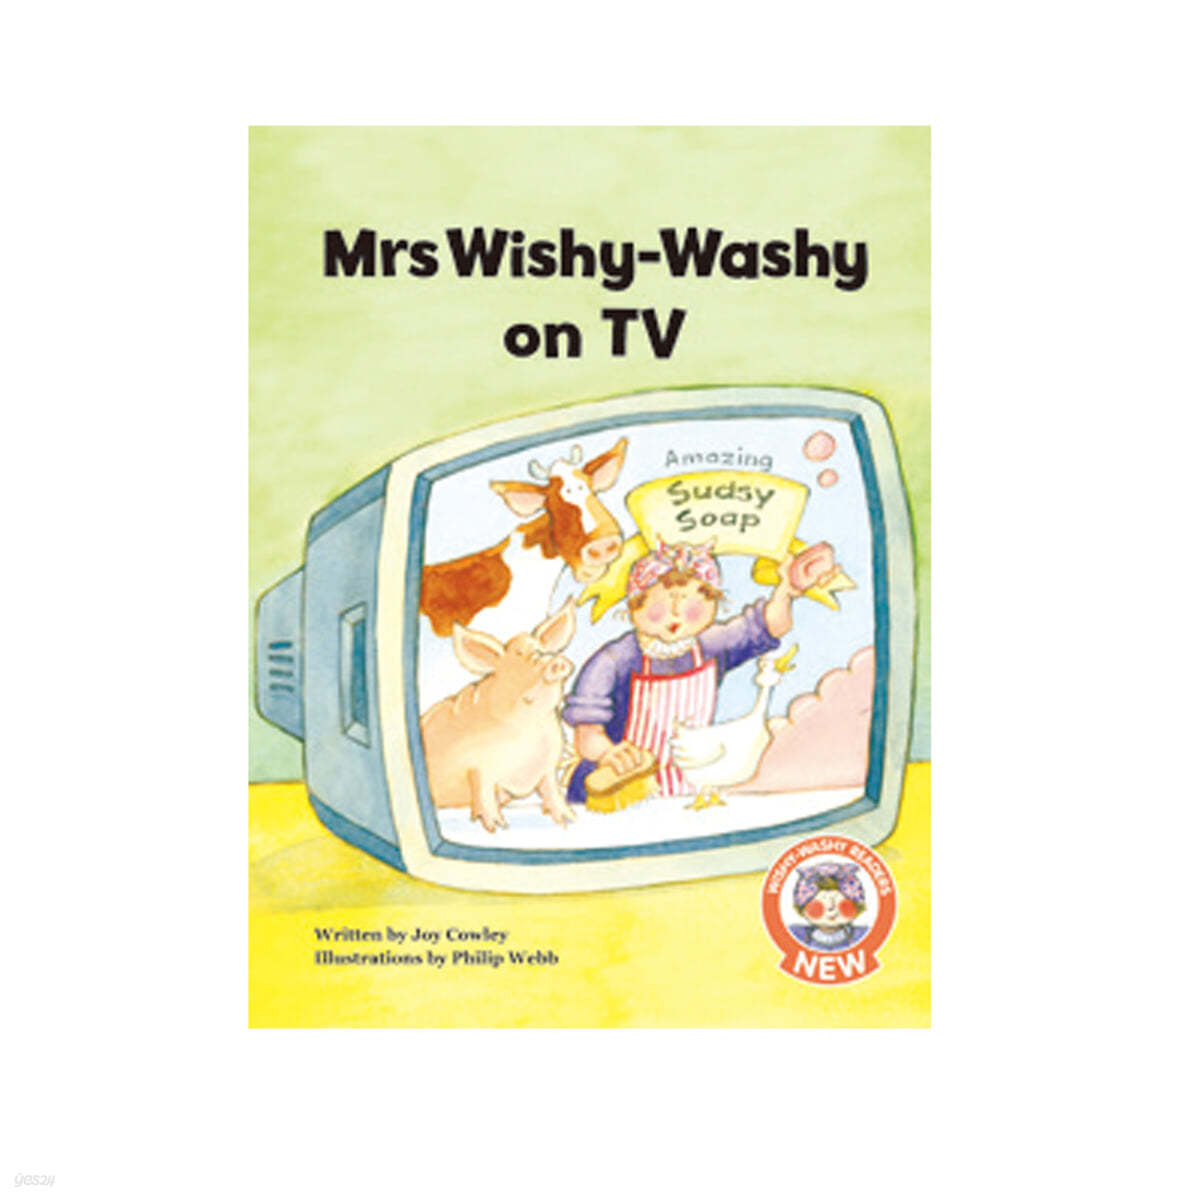 Mrs wishy-washy on TV